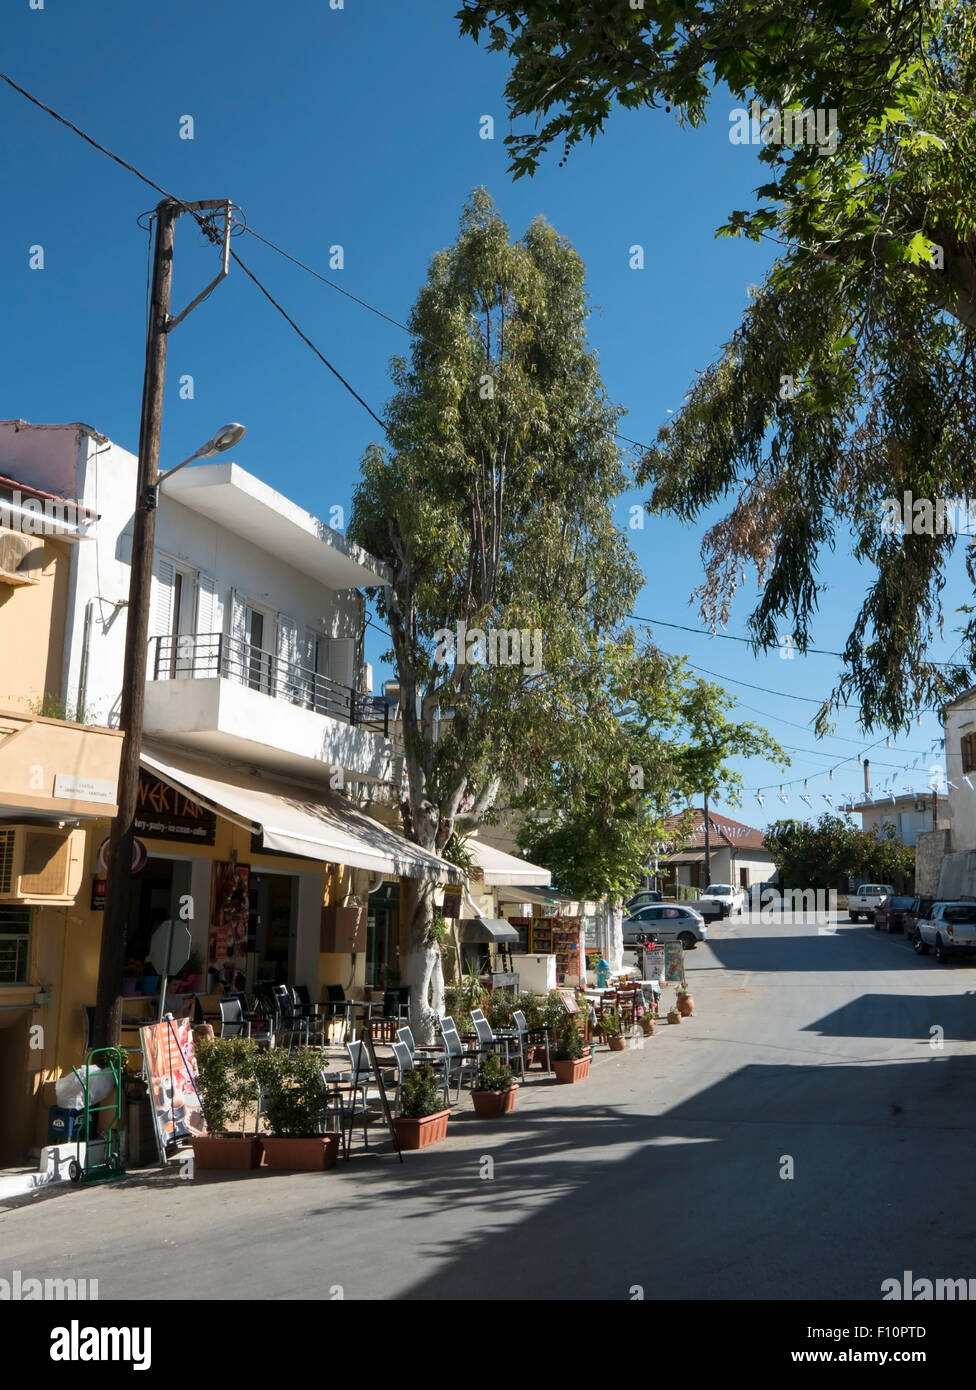 Dorfplatz im traditionellen alpinen Dorf Vamos, Apokoronos Bezirk, Kreta, Greece.Apokoronos Bezirk, Kreta, Gree Stockfoto